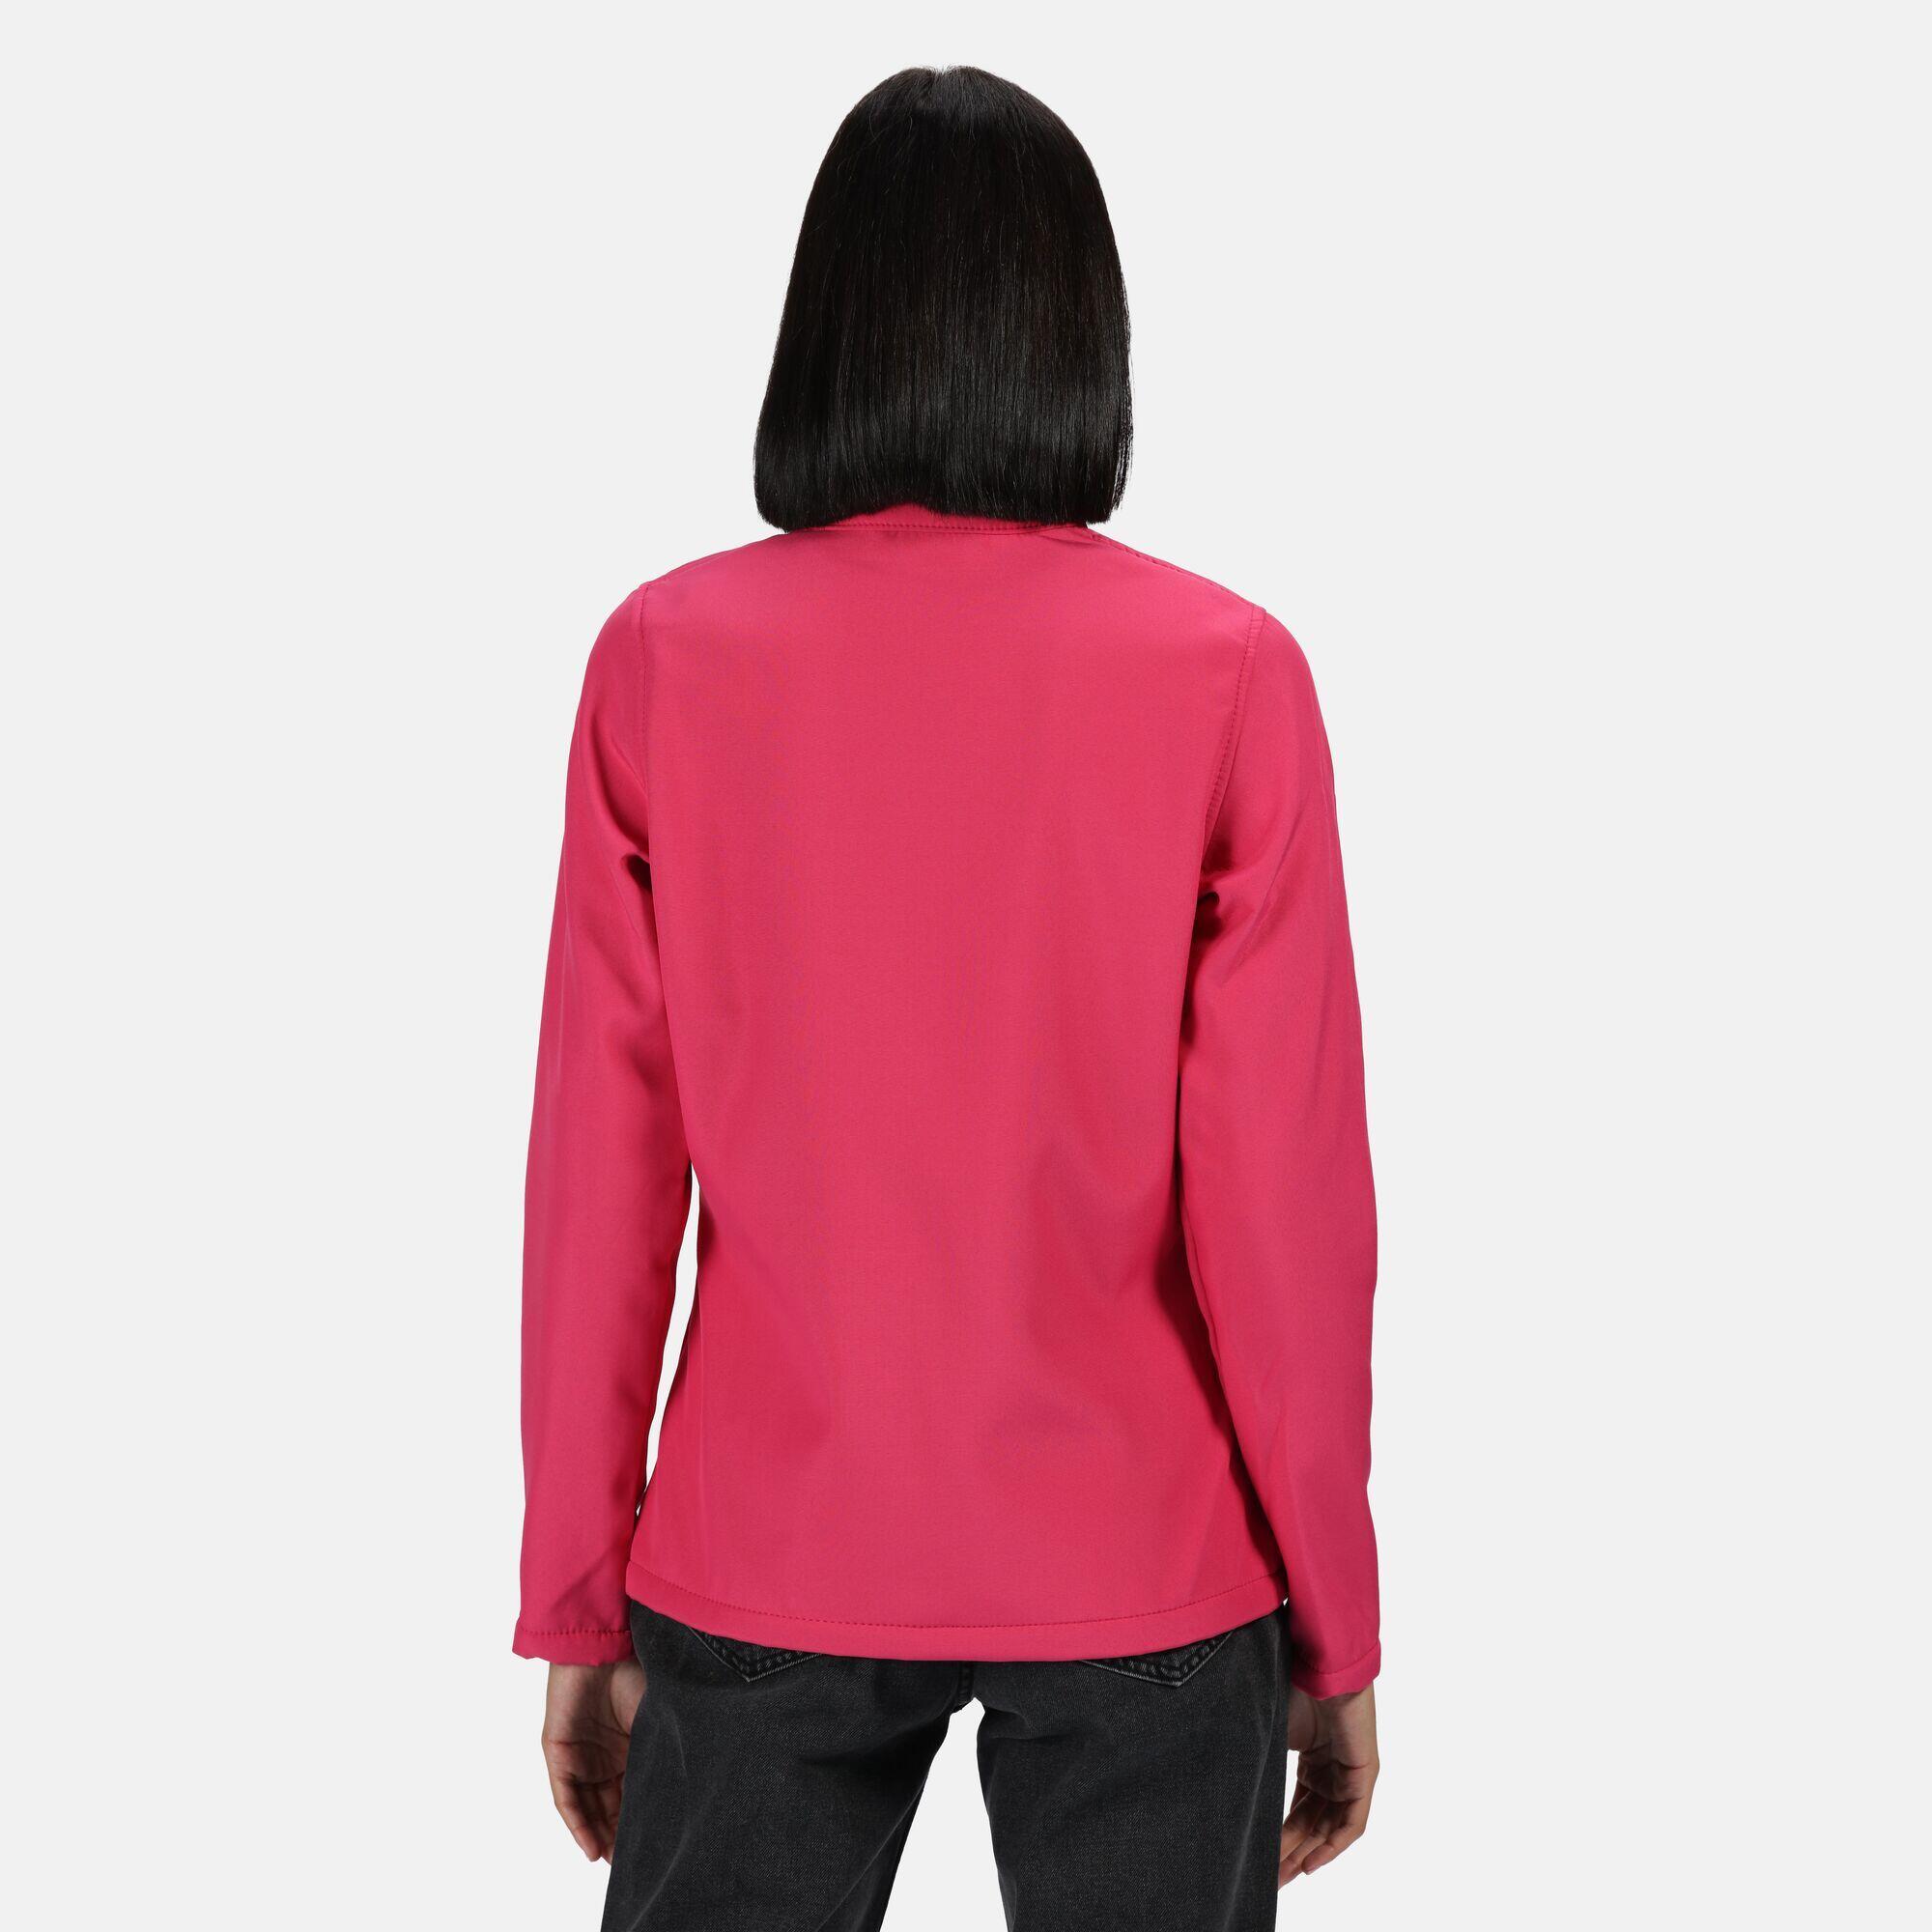 Womens/Ladies Ablaze Printable Softshell Jacket (Hot Pink/Black) 4/5